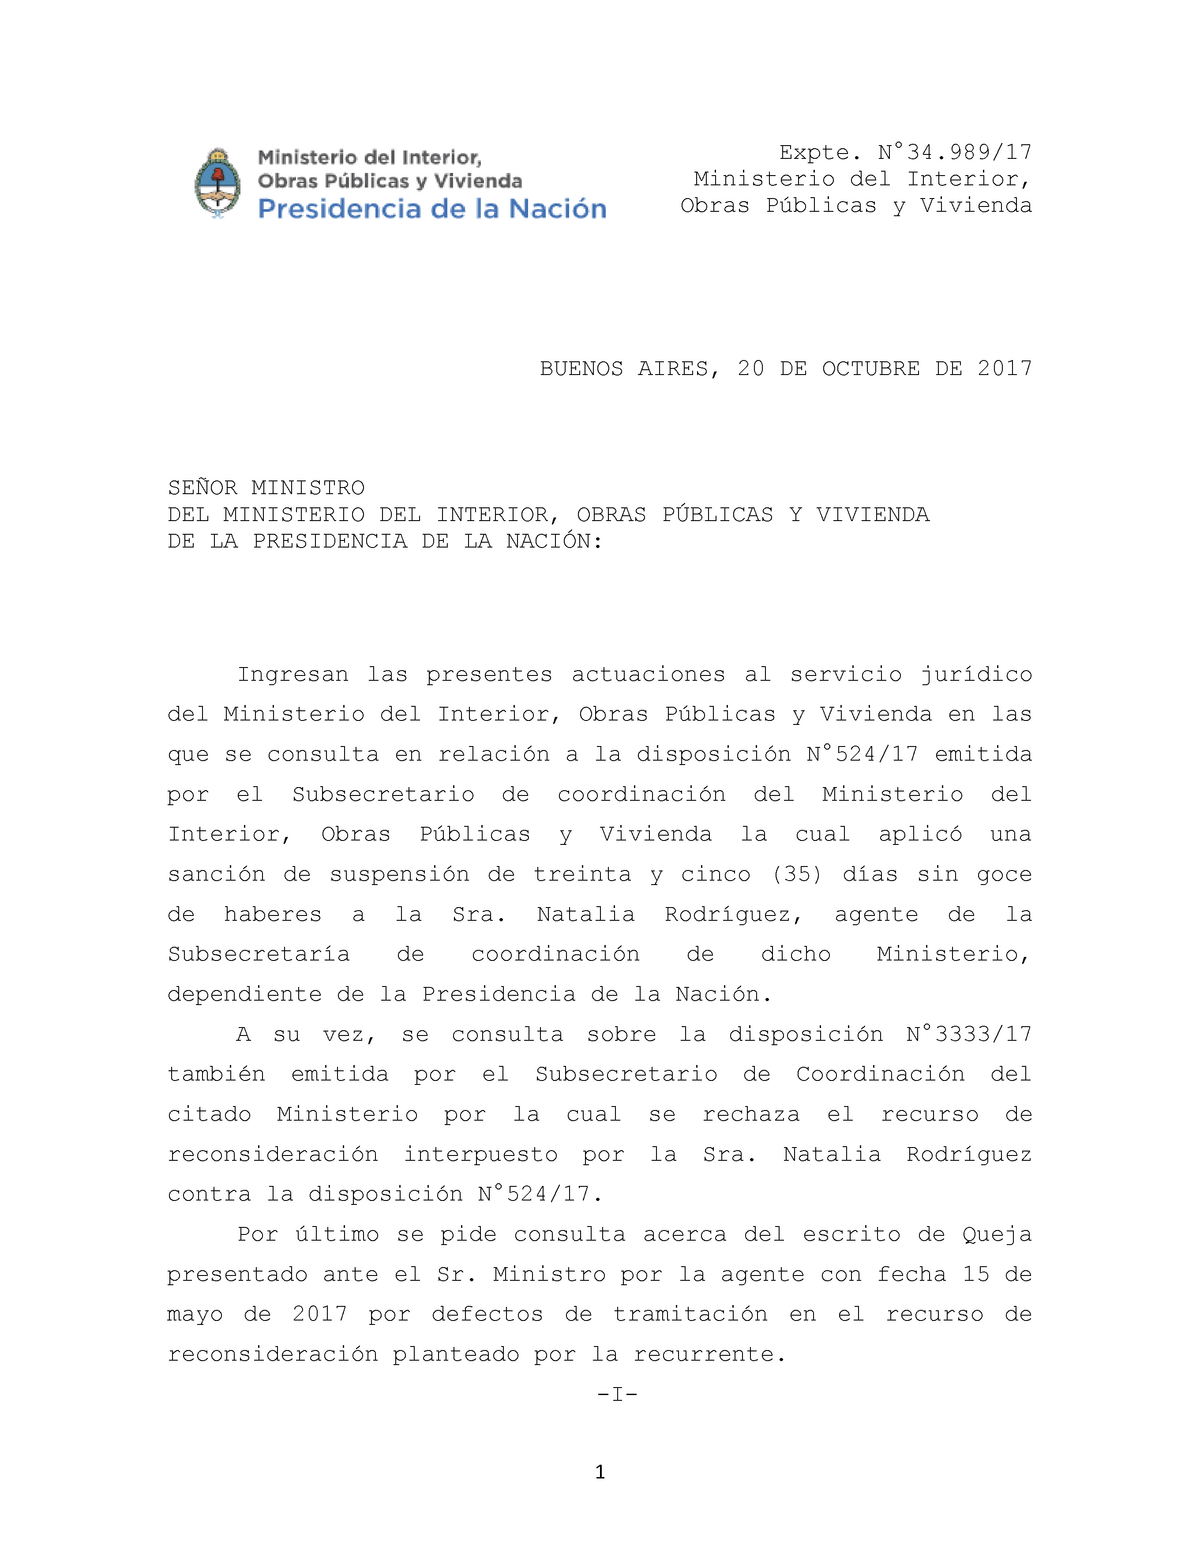 MODELO DE DICTAMEN, DERECHO ADMINISTRATIVO - Expte. N°34/17 Ministerio del  Interior, Obras Públicas - Studocu